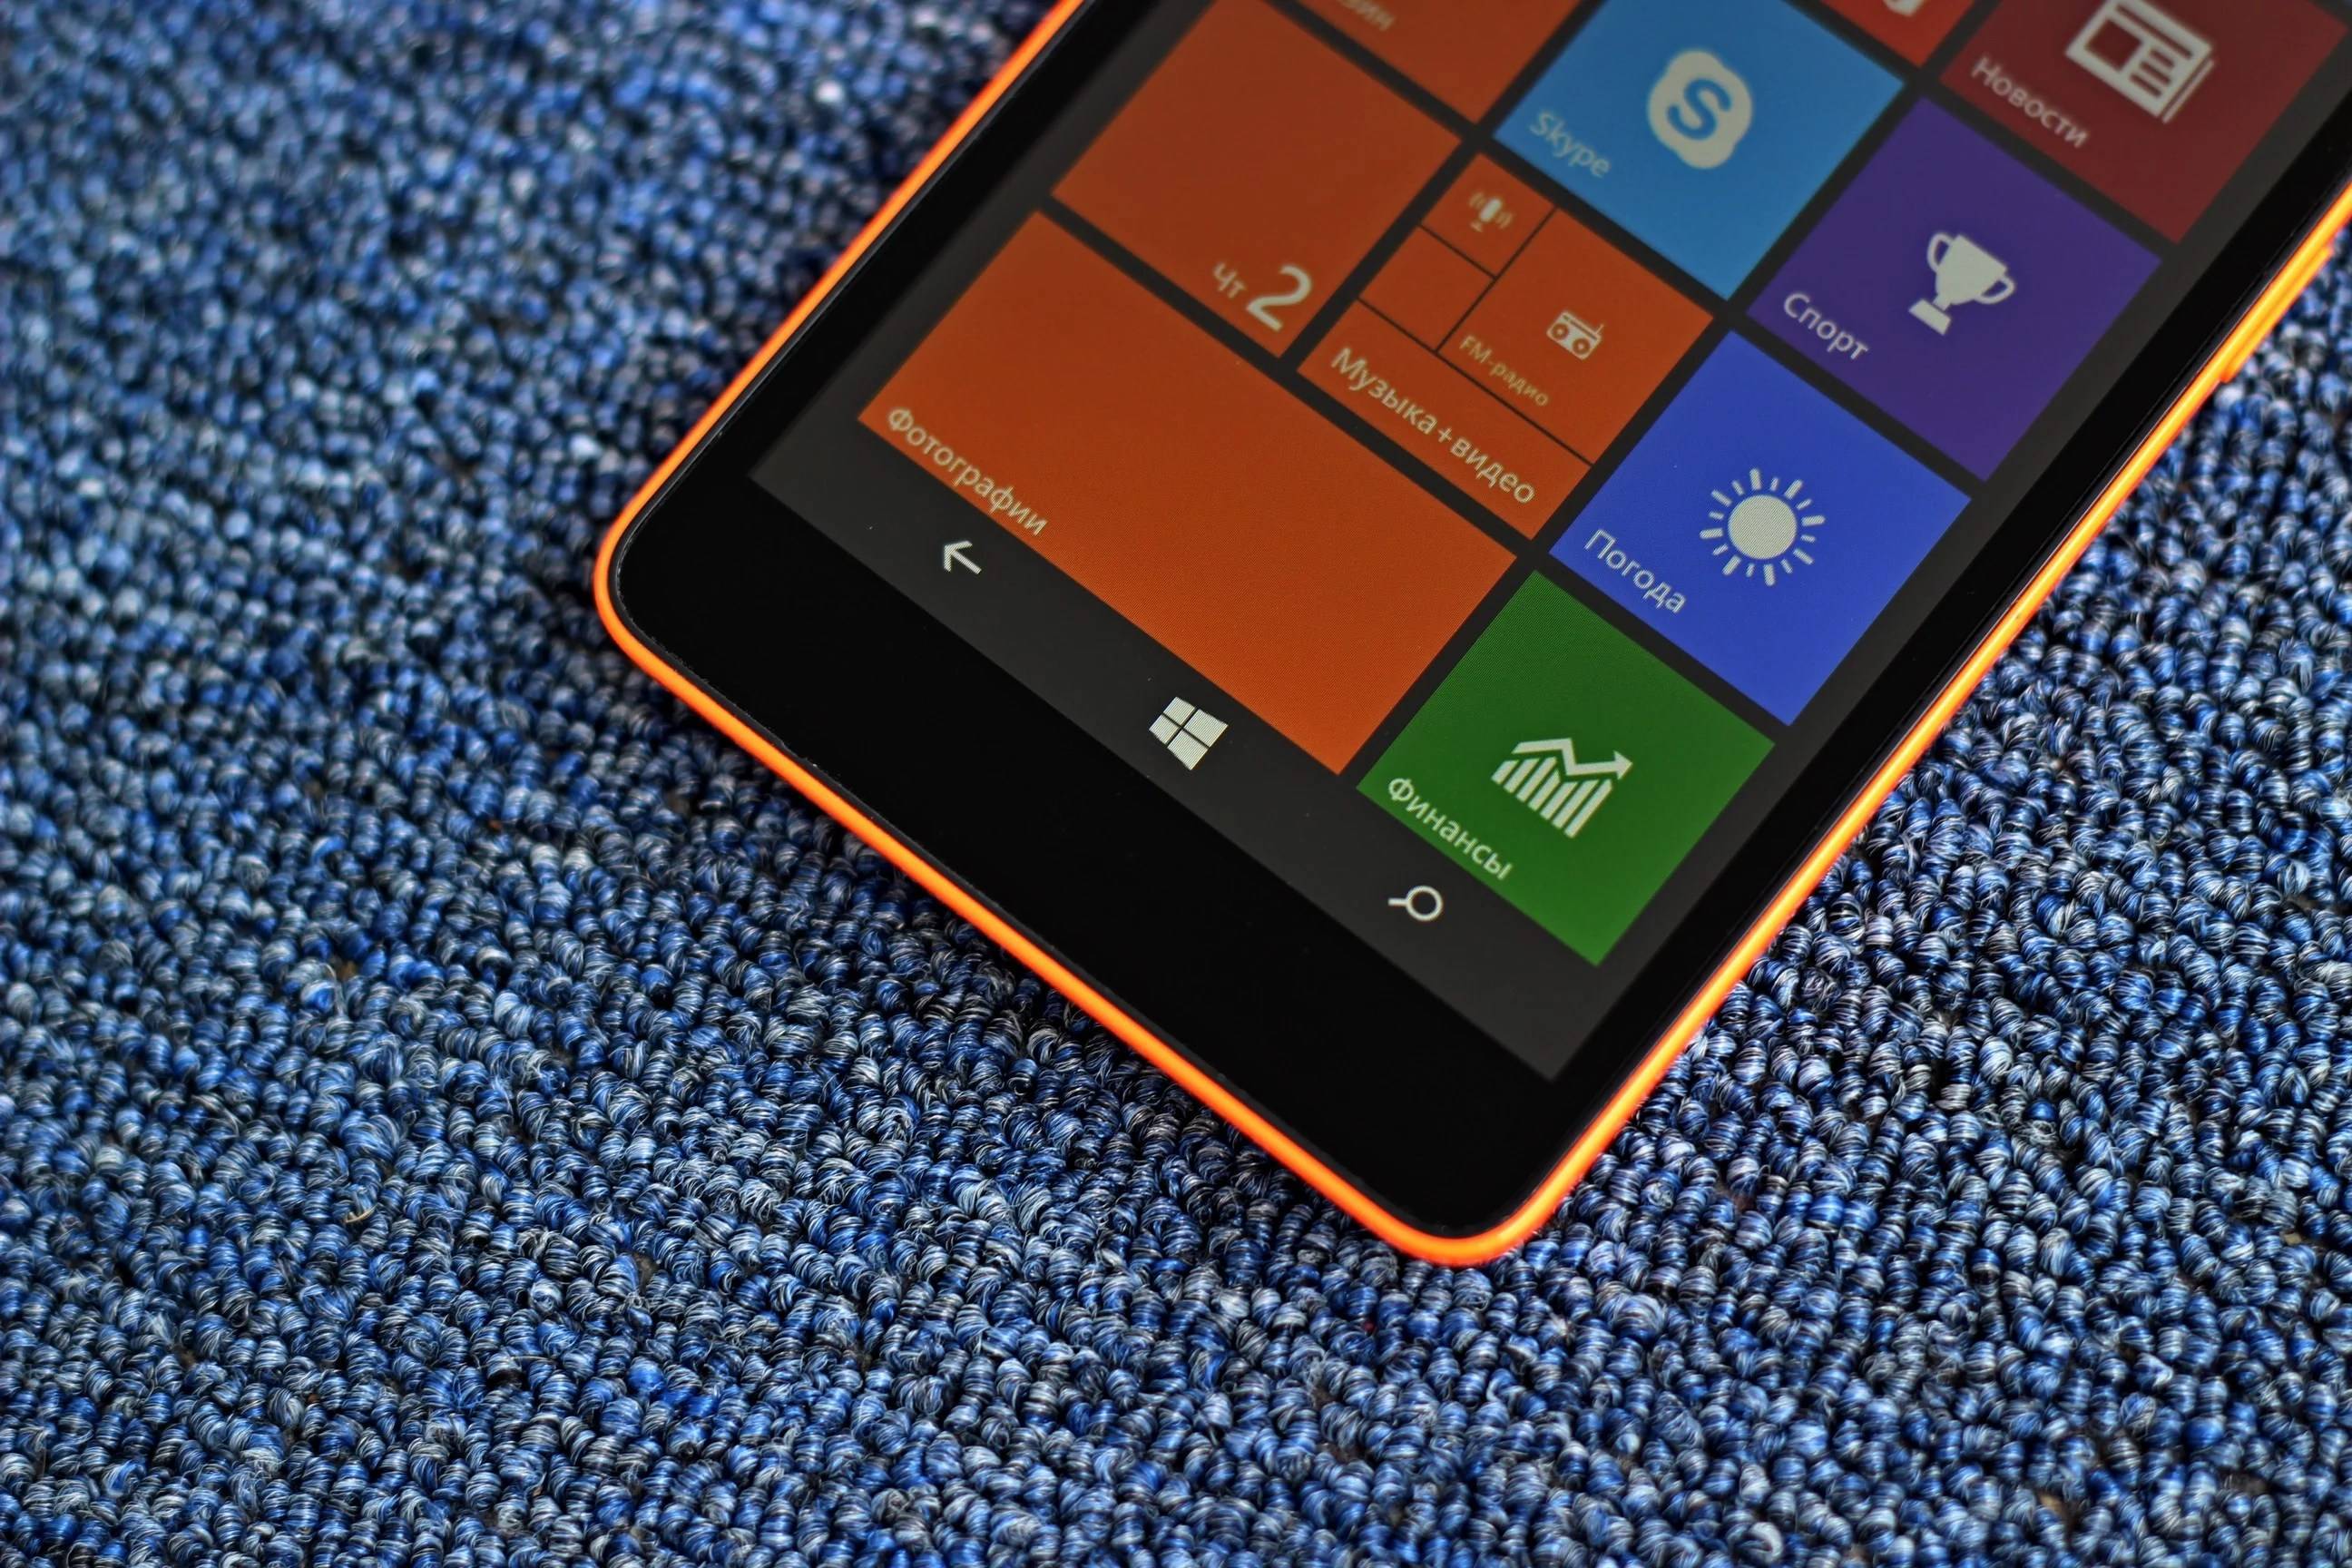 Nokia lumia 730: обзор характеристик и возможностей смартфона